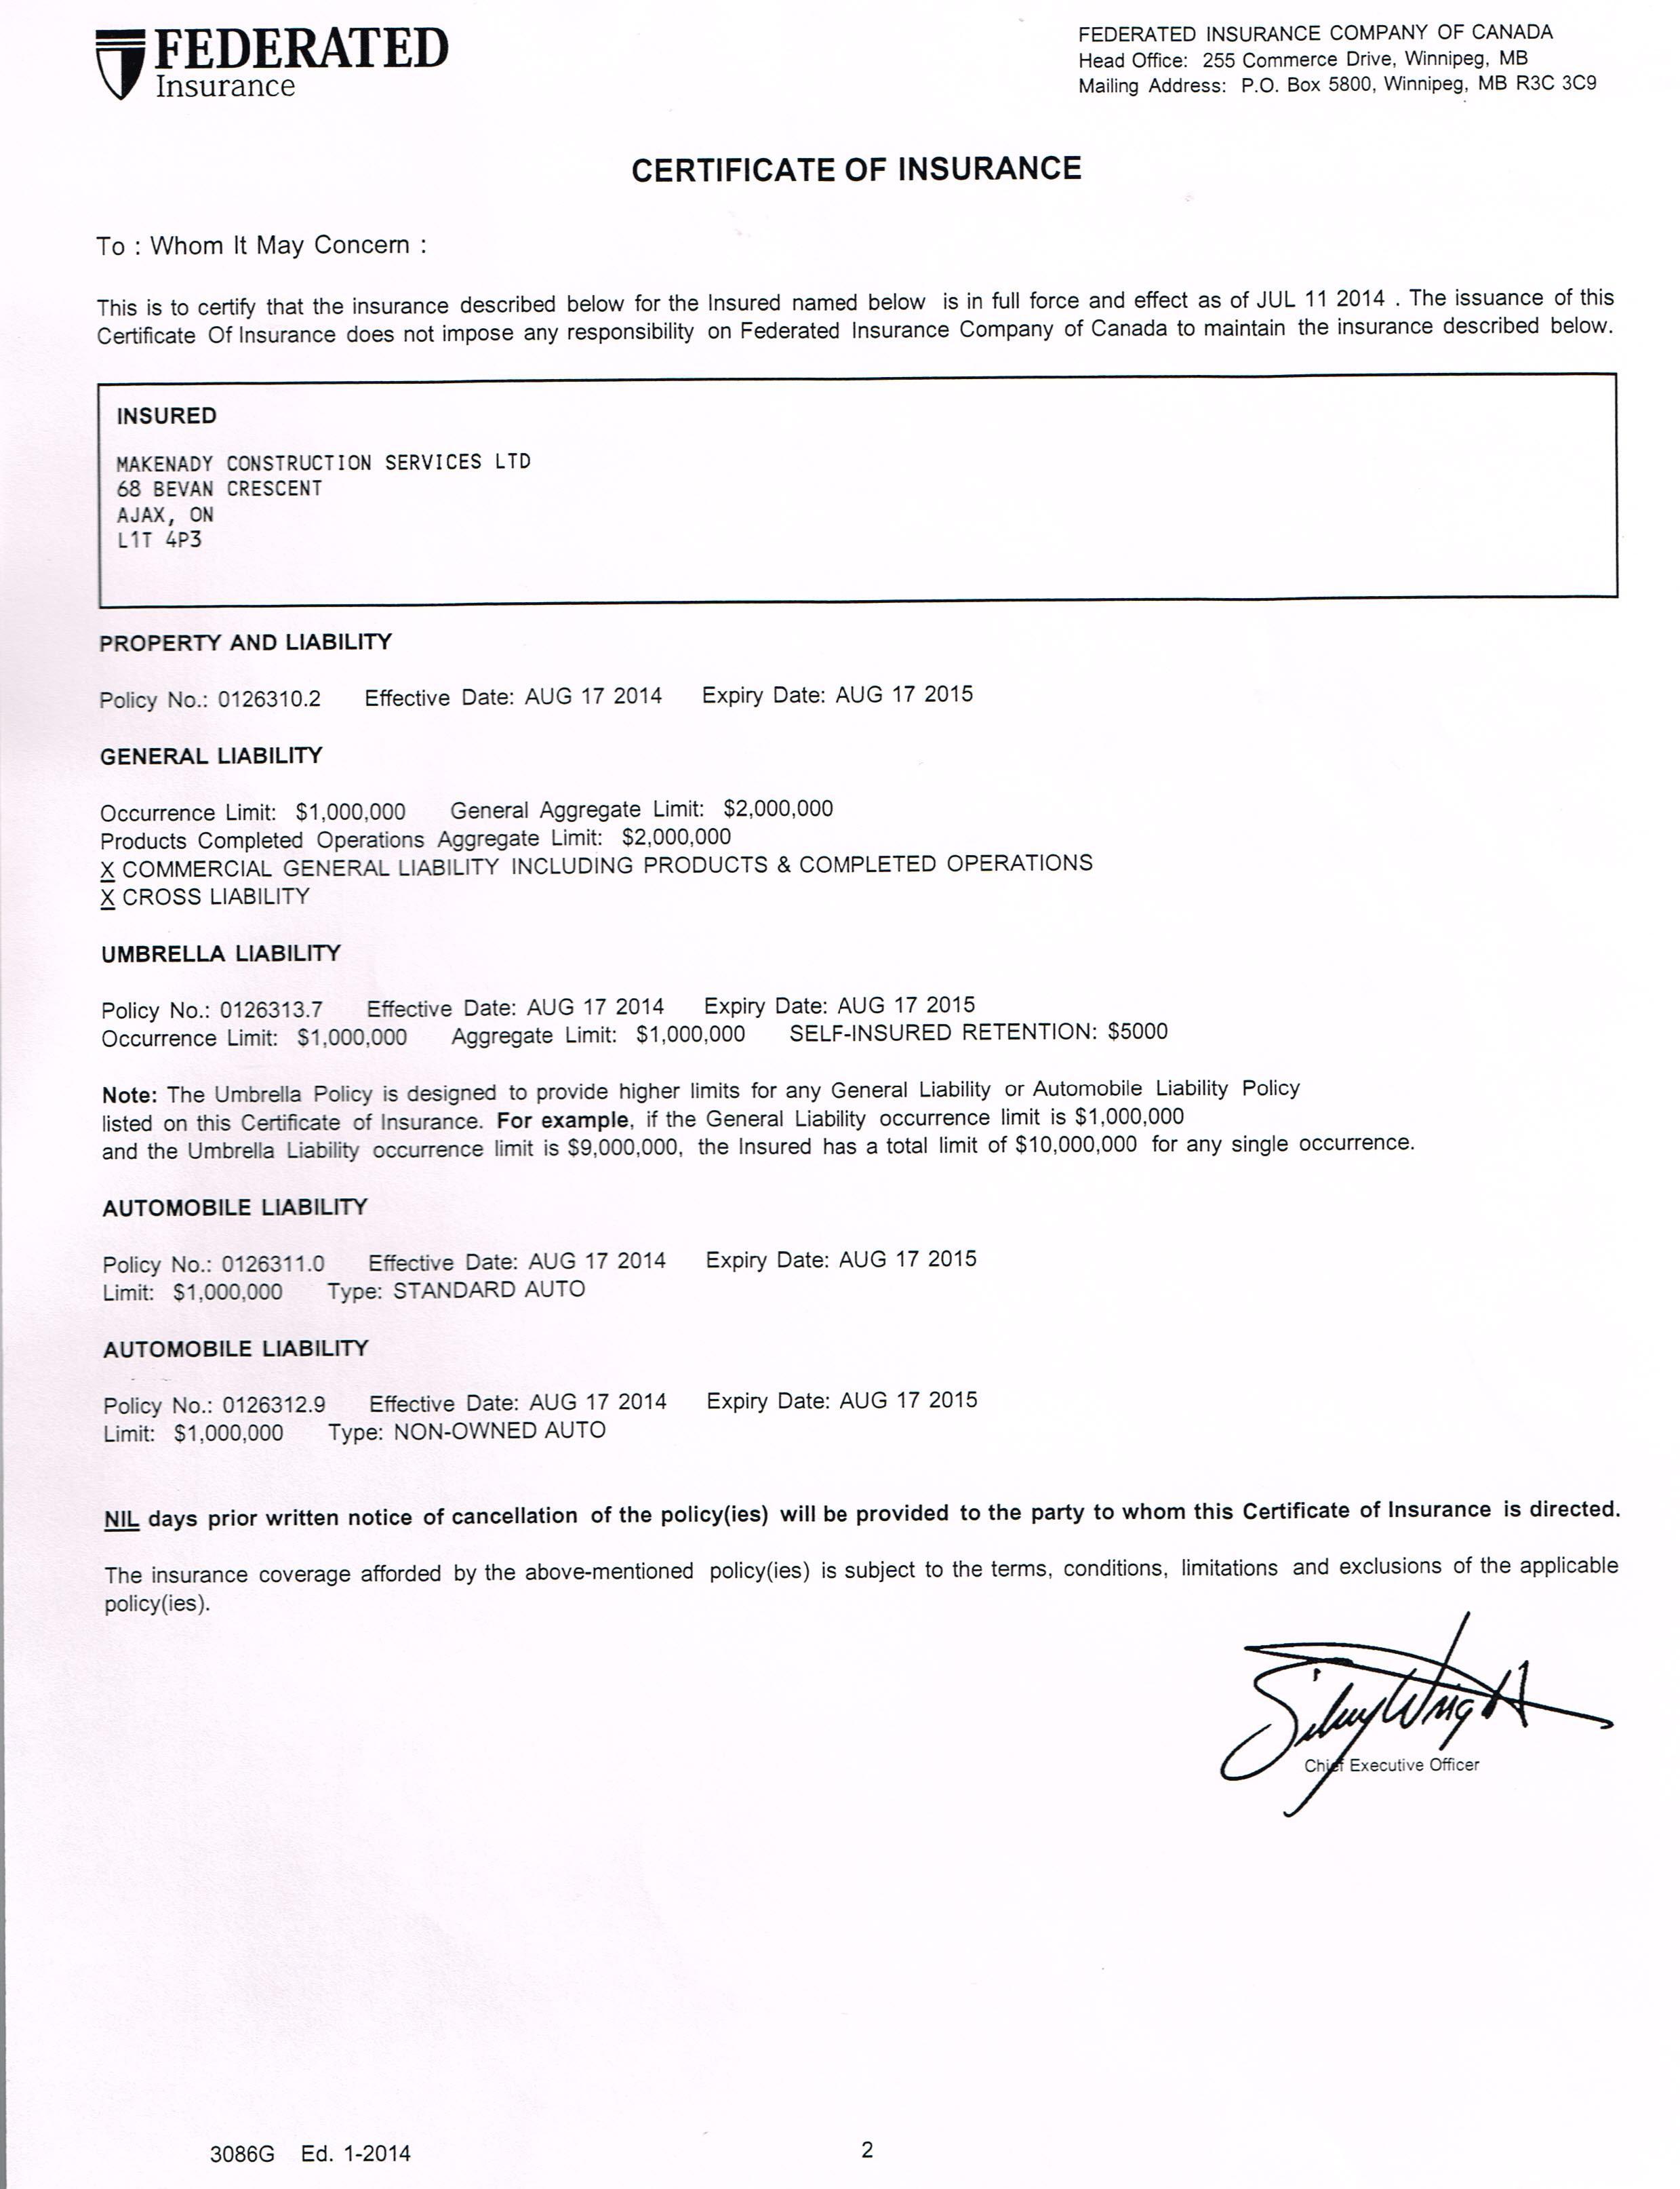 WSIB Certificate of Clearance